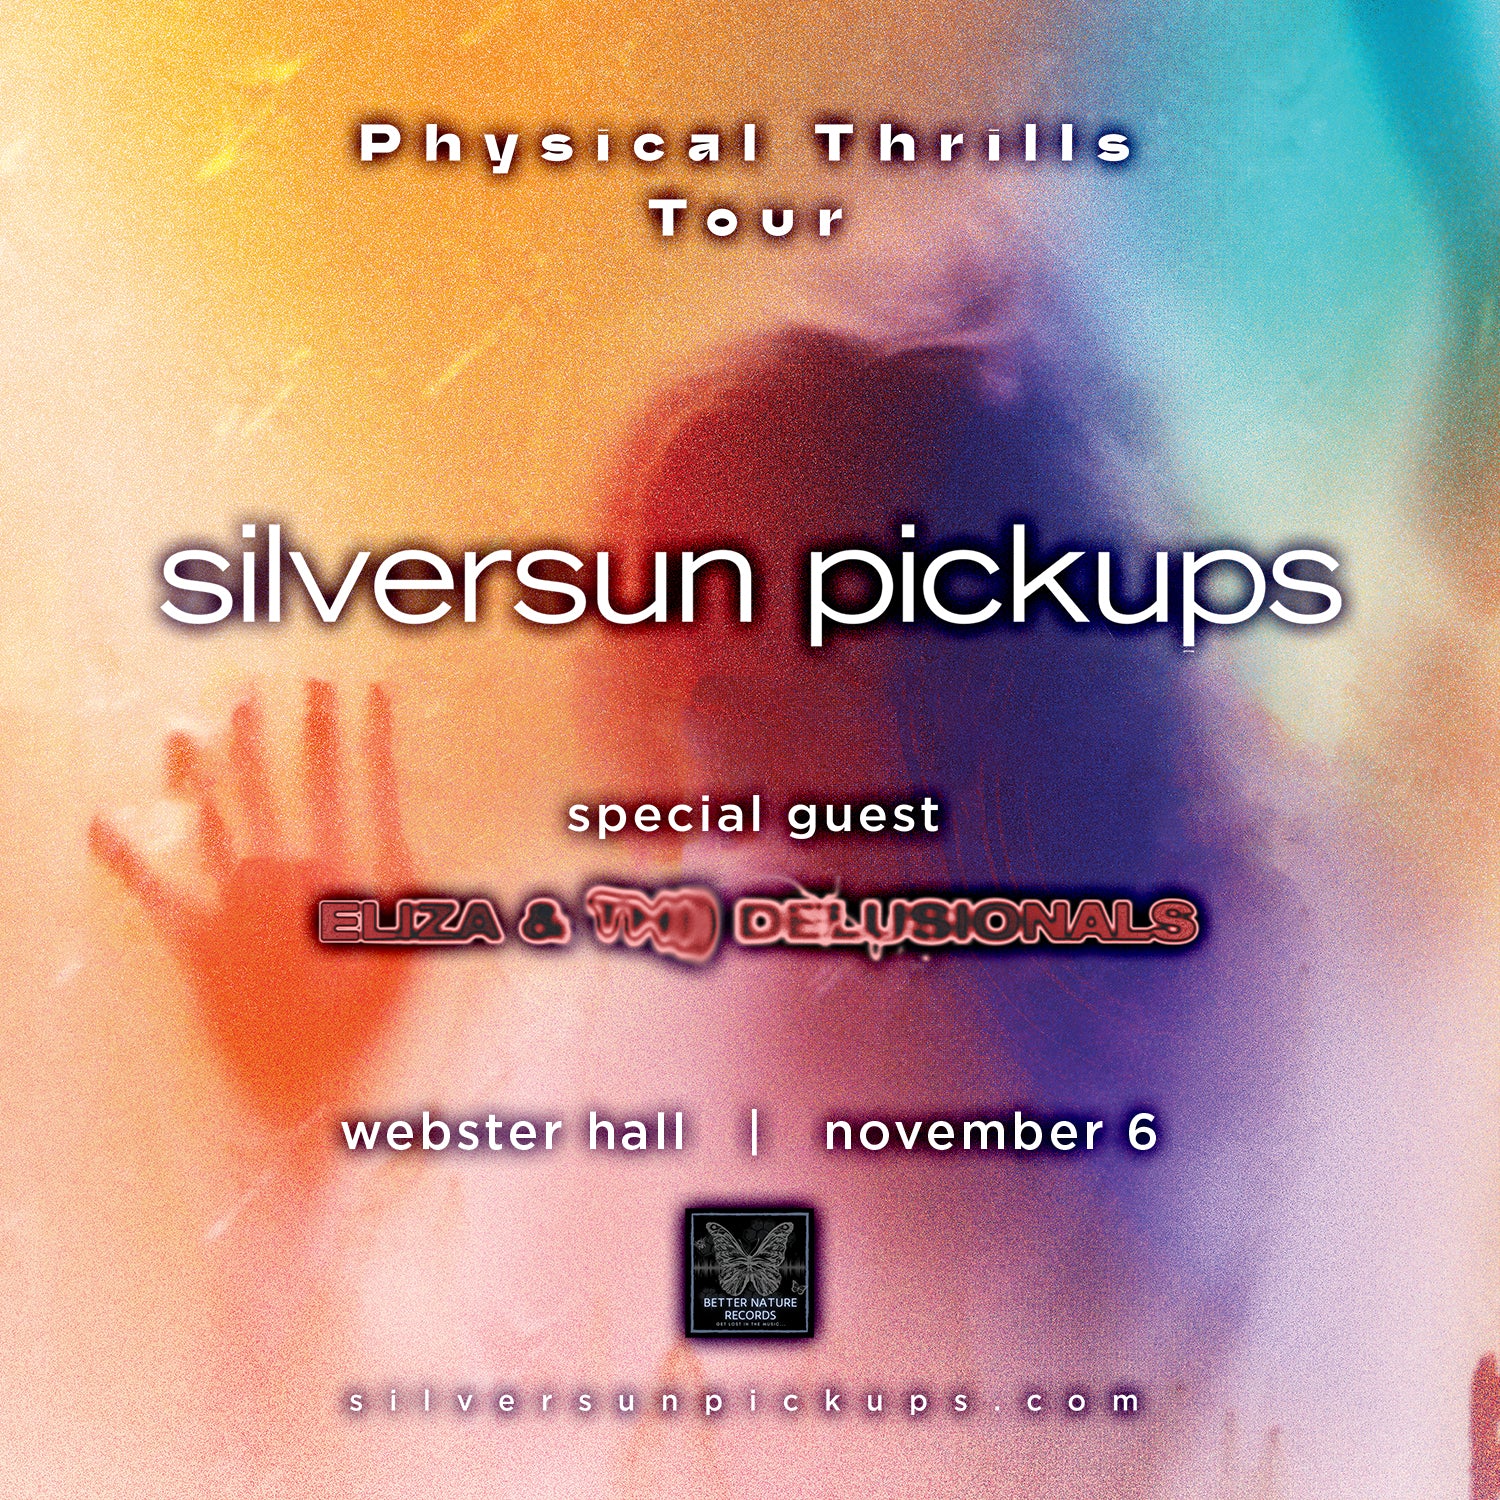 Silversun Pickups VIP Package Ticket Giveaway